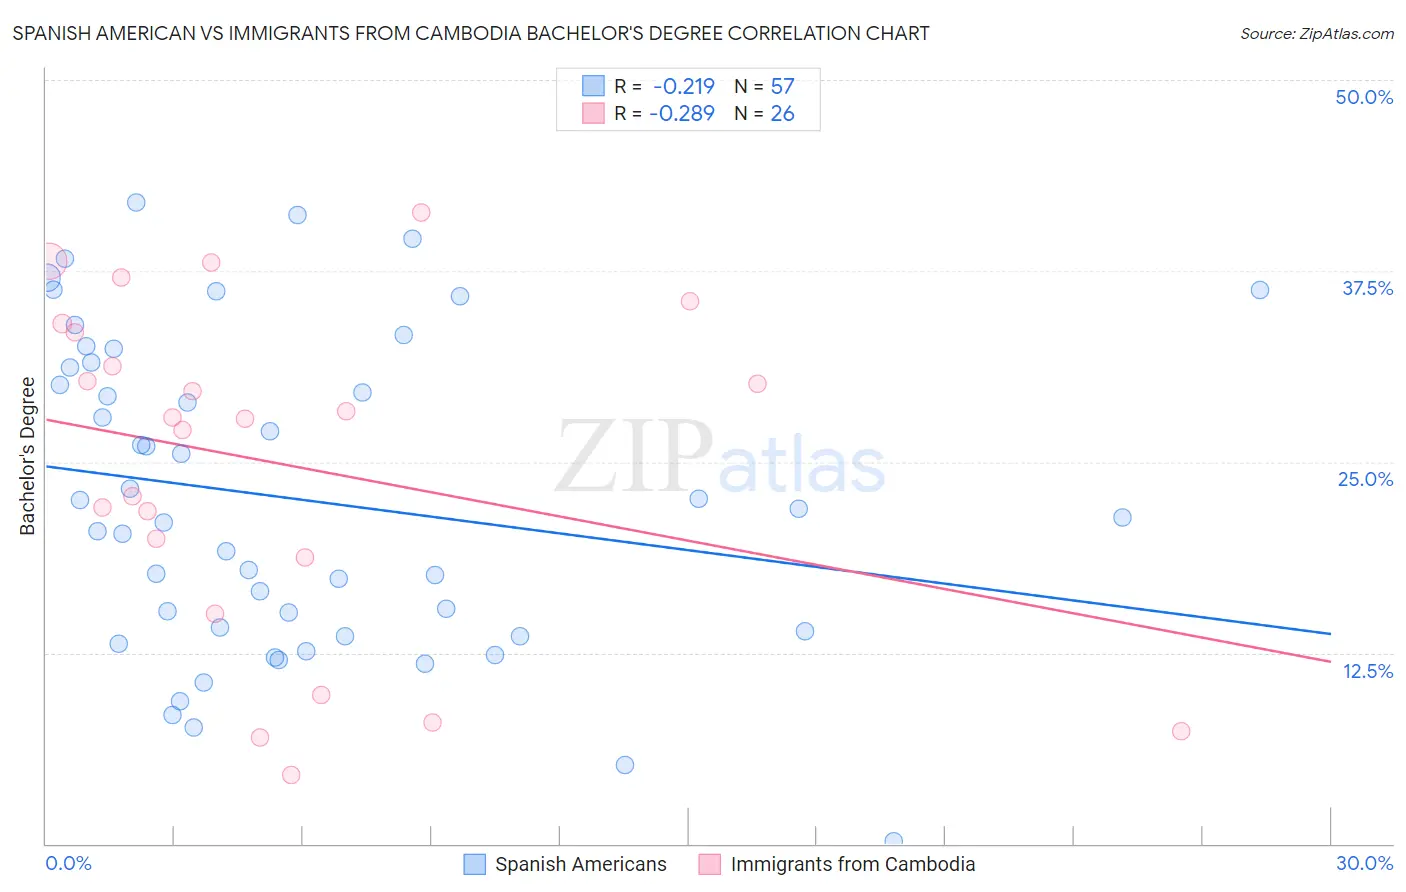 Spanish American vs Immigrants from Cambodia Bachelor's Degree